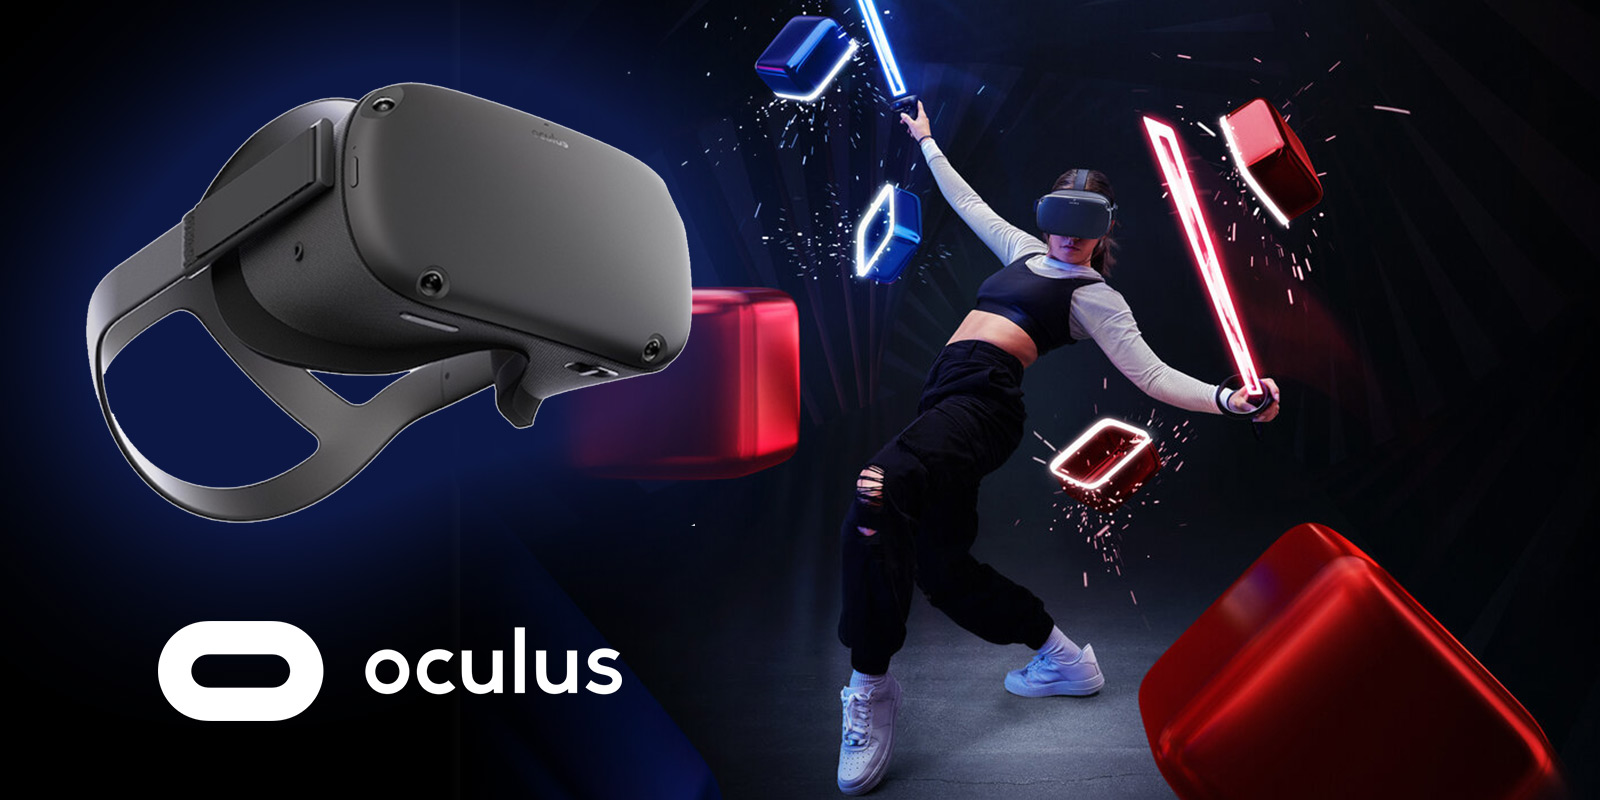 Oculus quest 2 games. ВР очки Oculus 2. ВР шлем Oculus Quest 2. Виртуальная реальность Oculus Quest 2. VR очки Oculus Quest 3.